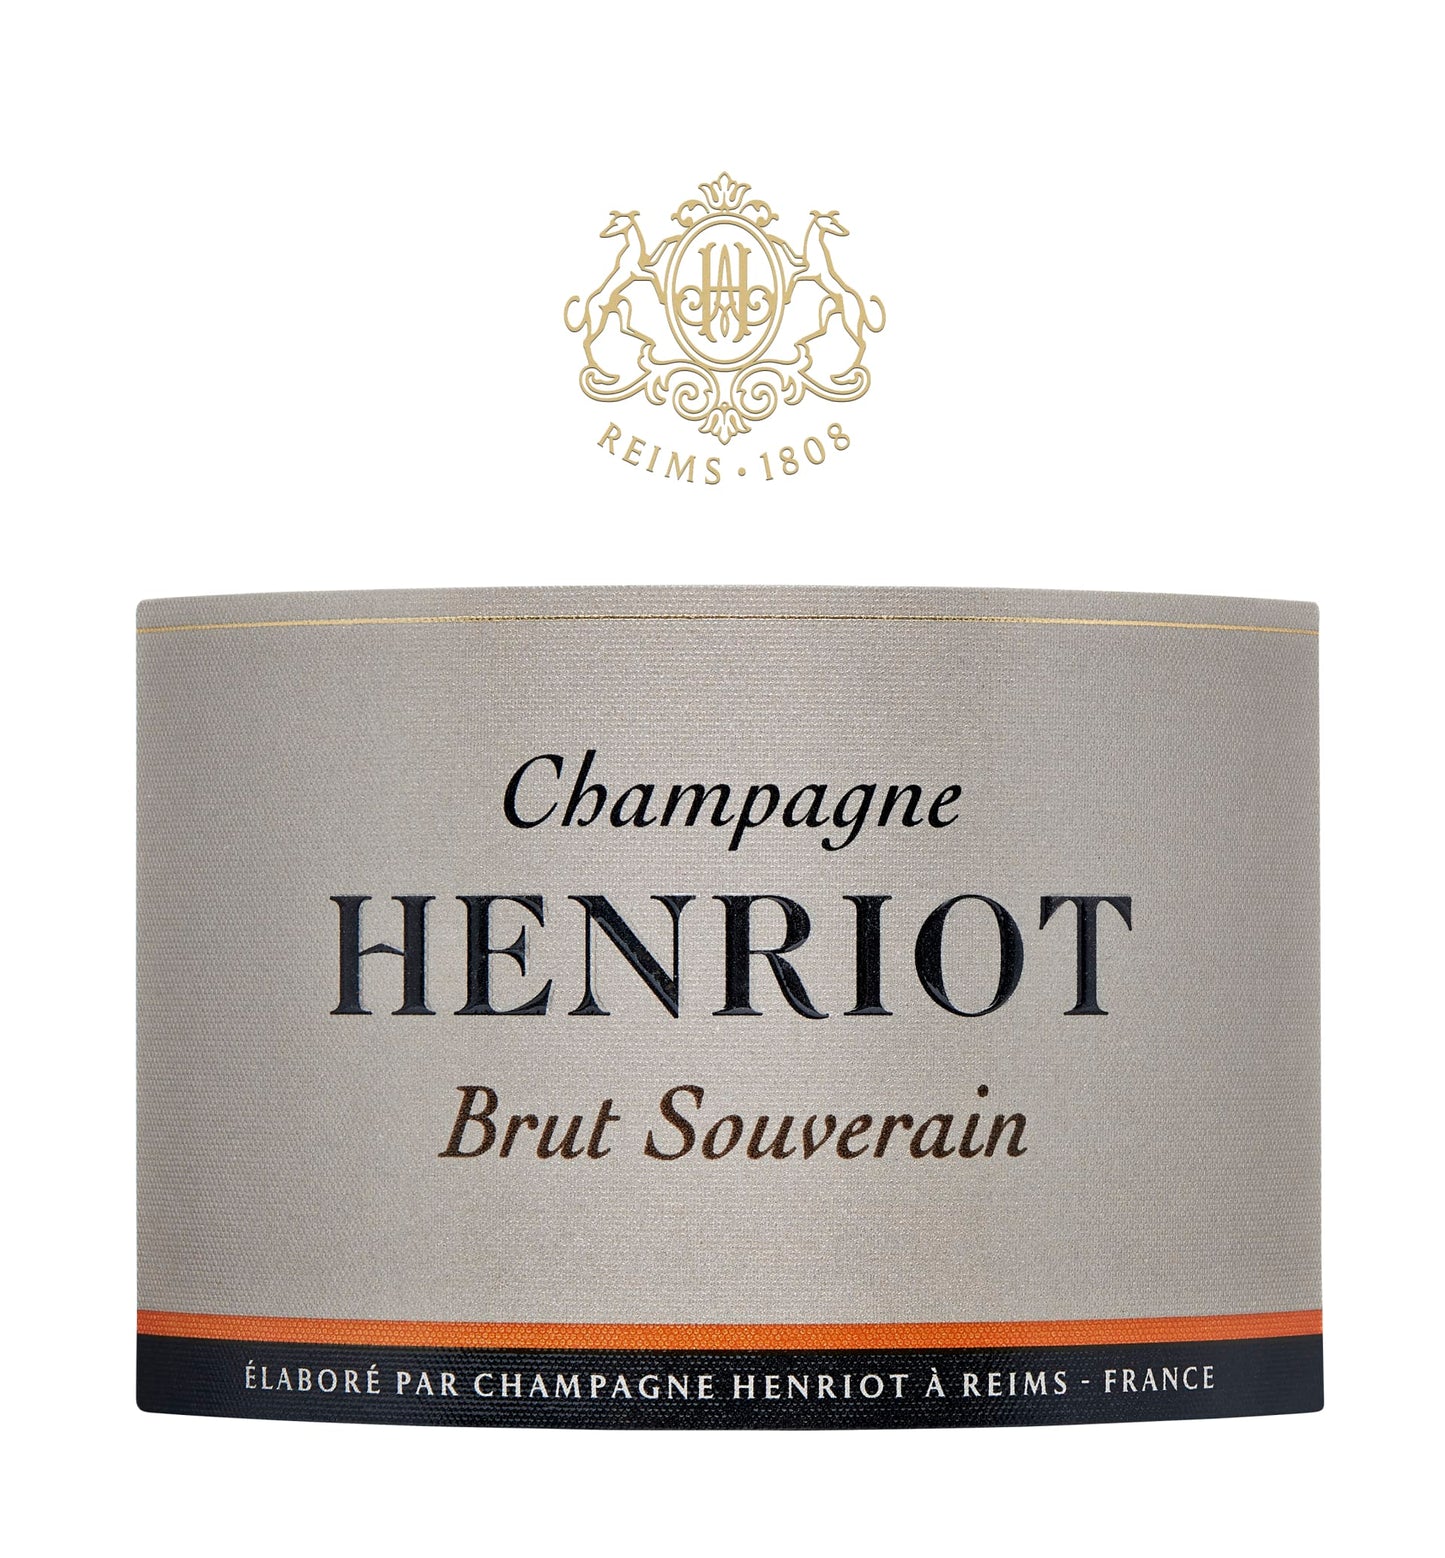 Henriot "Brut Souverain" Champagne